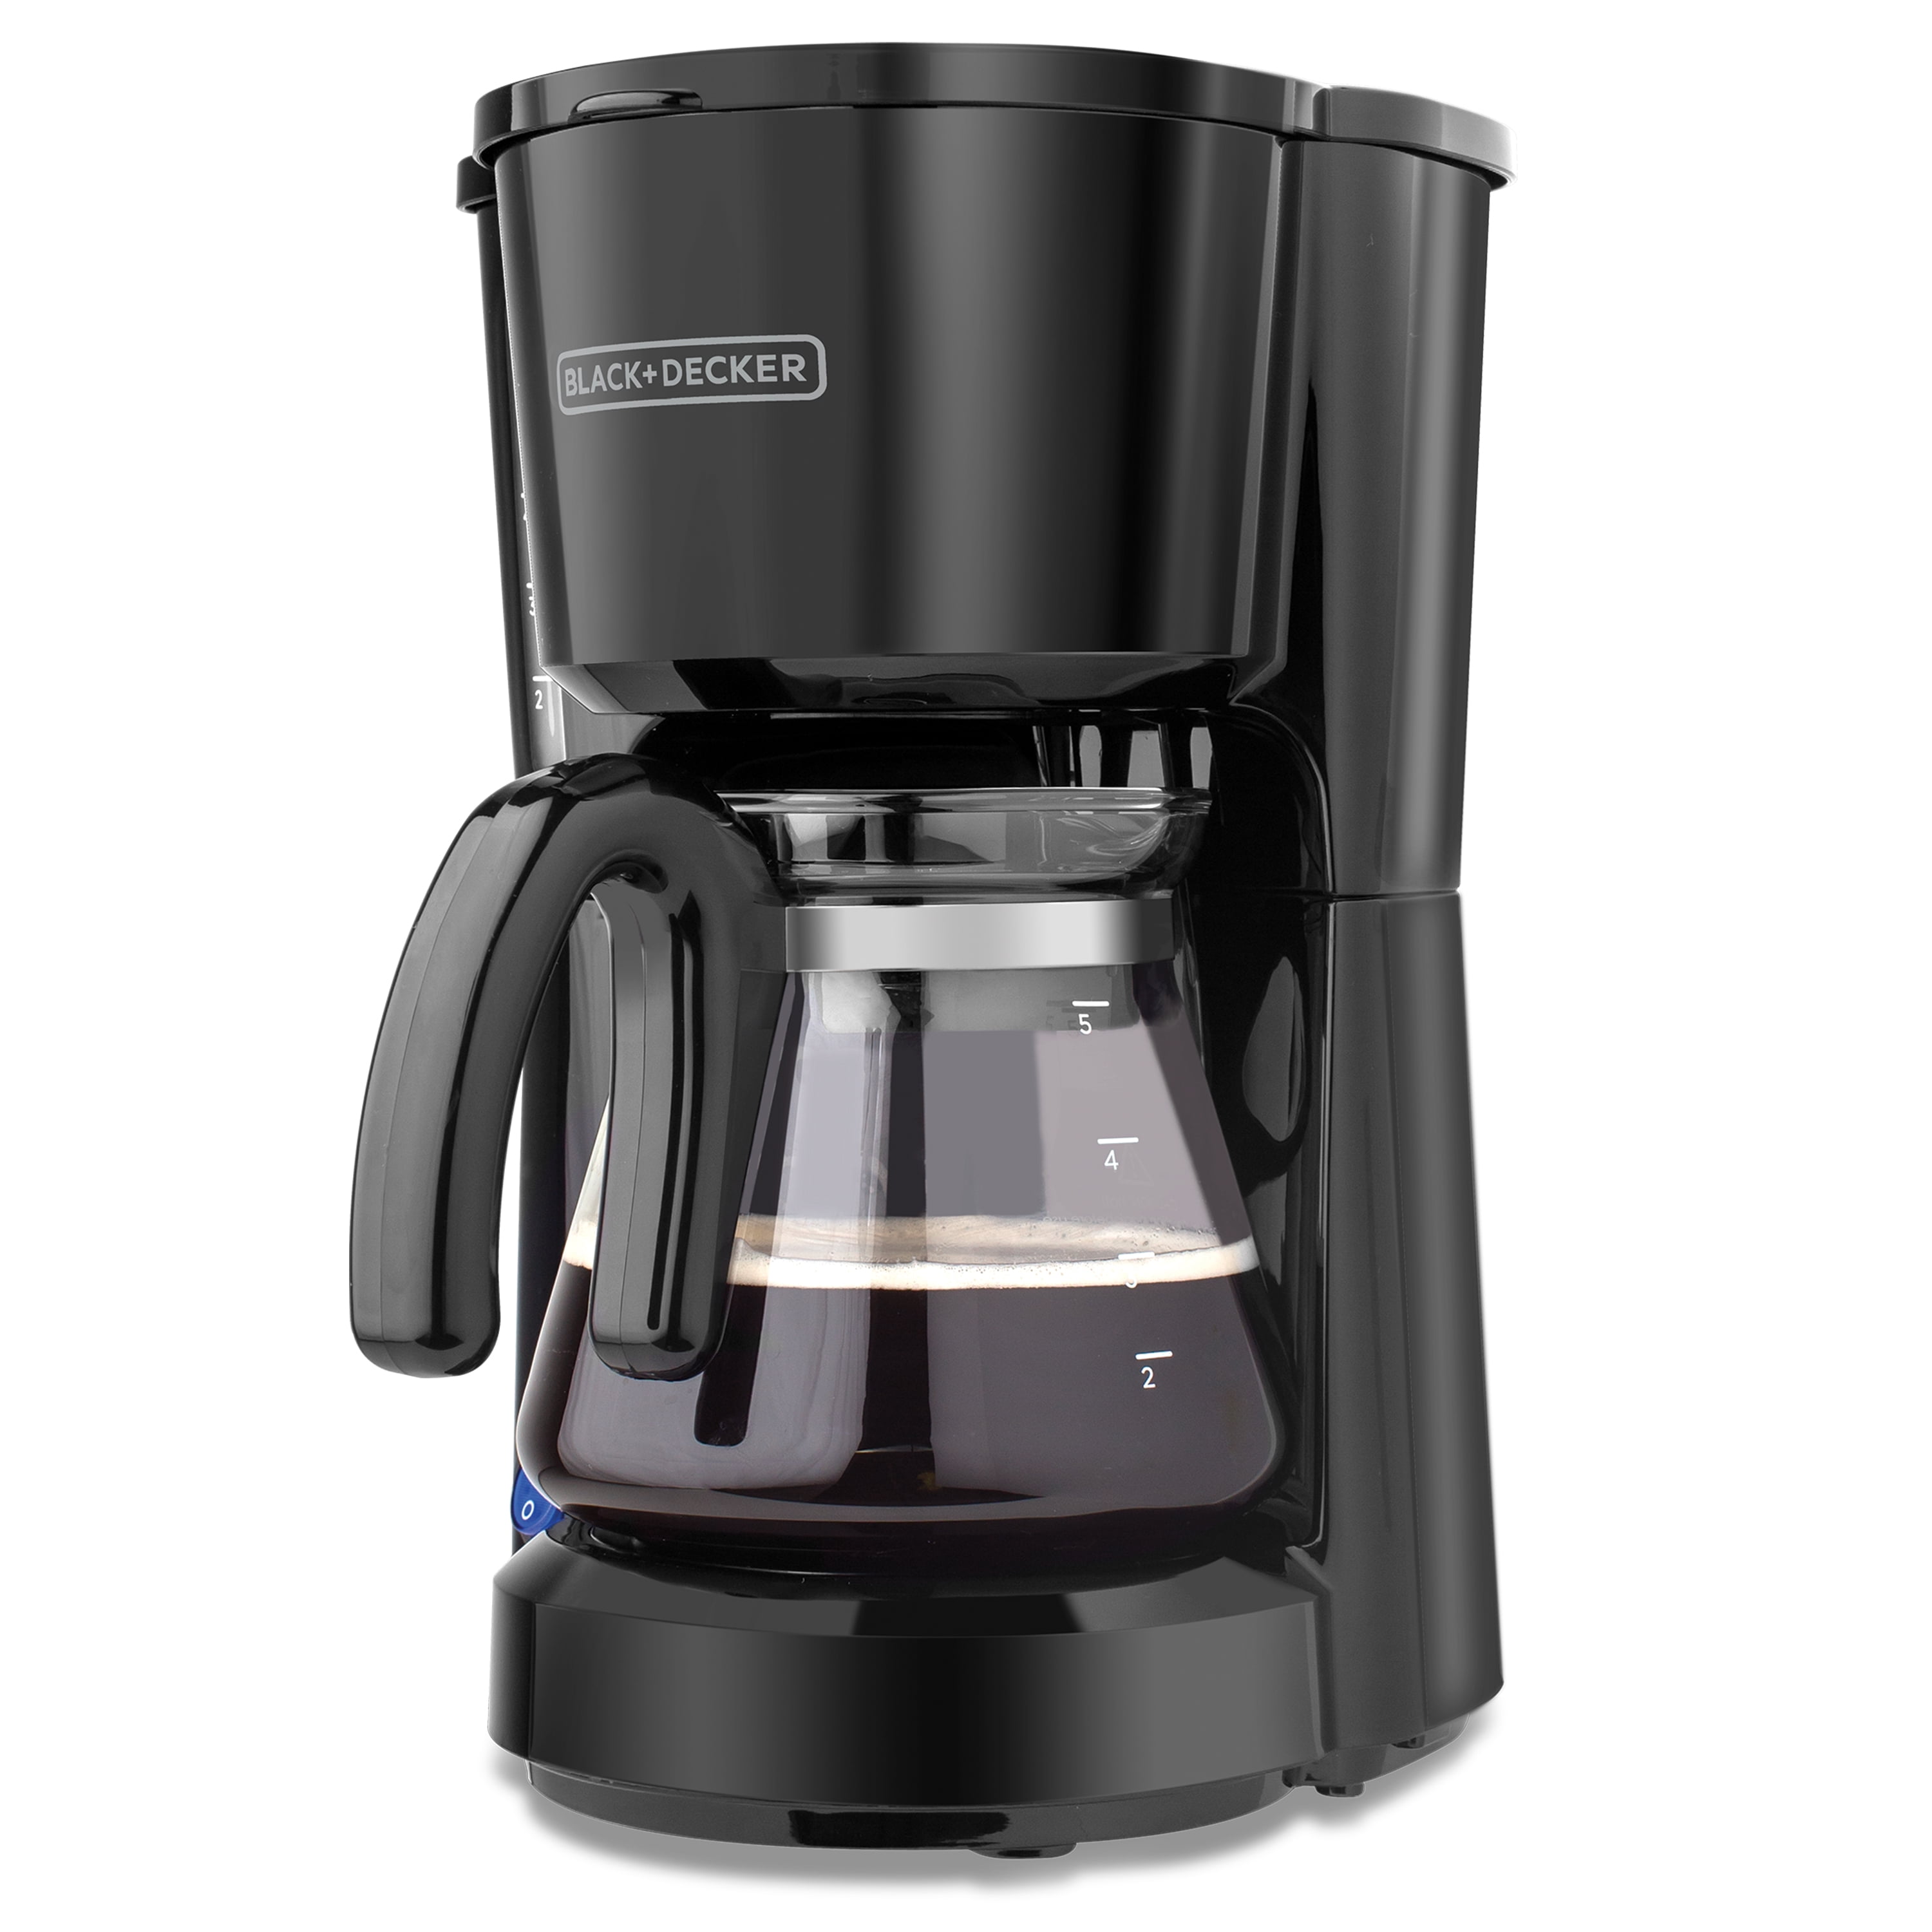 Black and Decker 5 Cup Coffee Maker CM0916B 110V